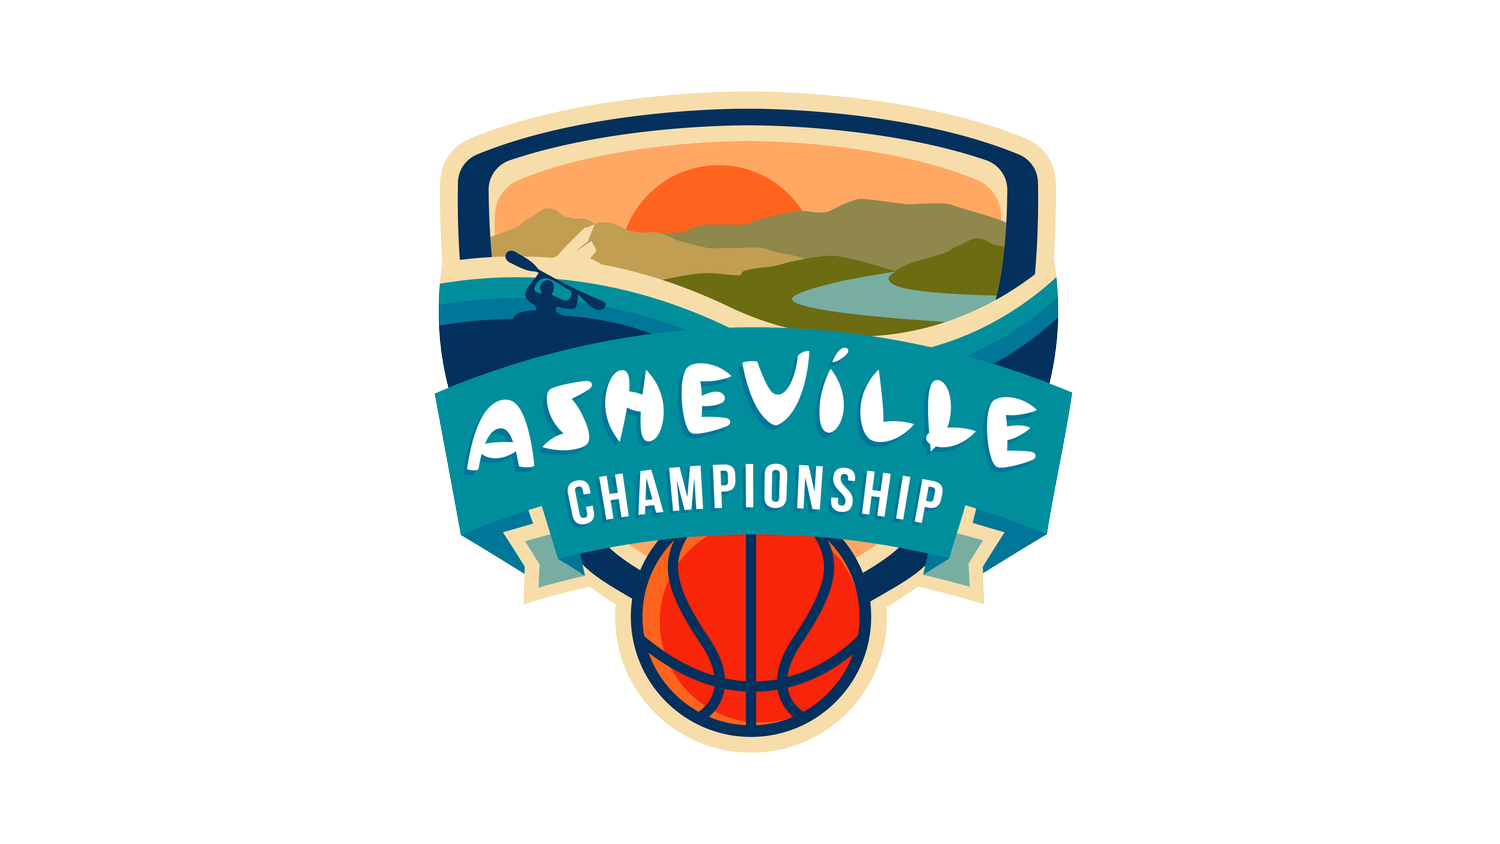 Asheville Championship - Official Athletics Website